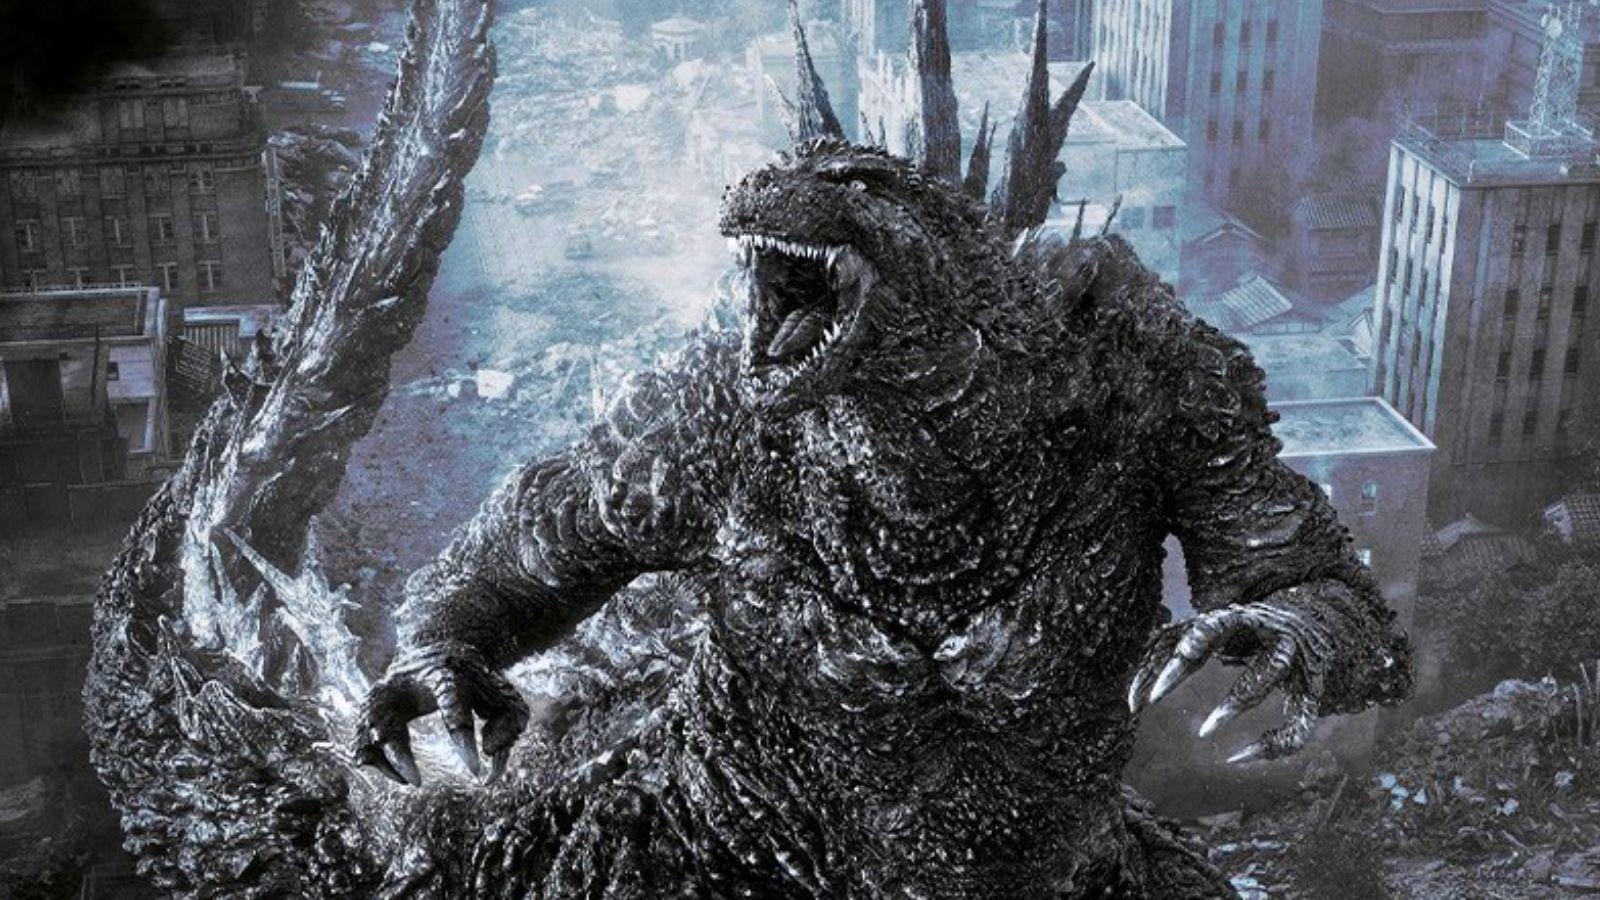 Godzilla in Godzilla Minus One/Minus Color.